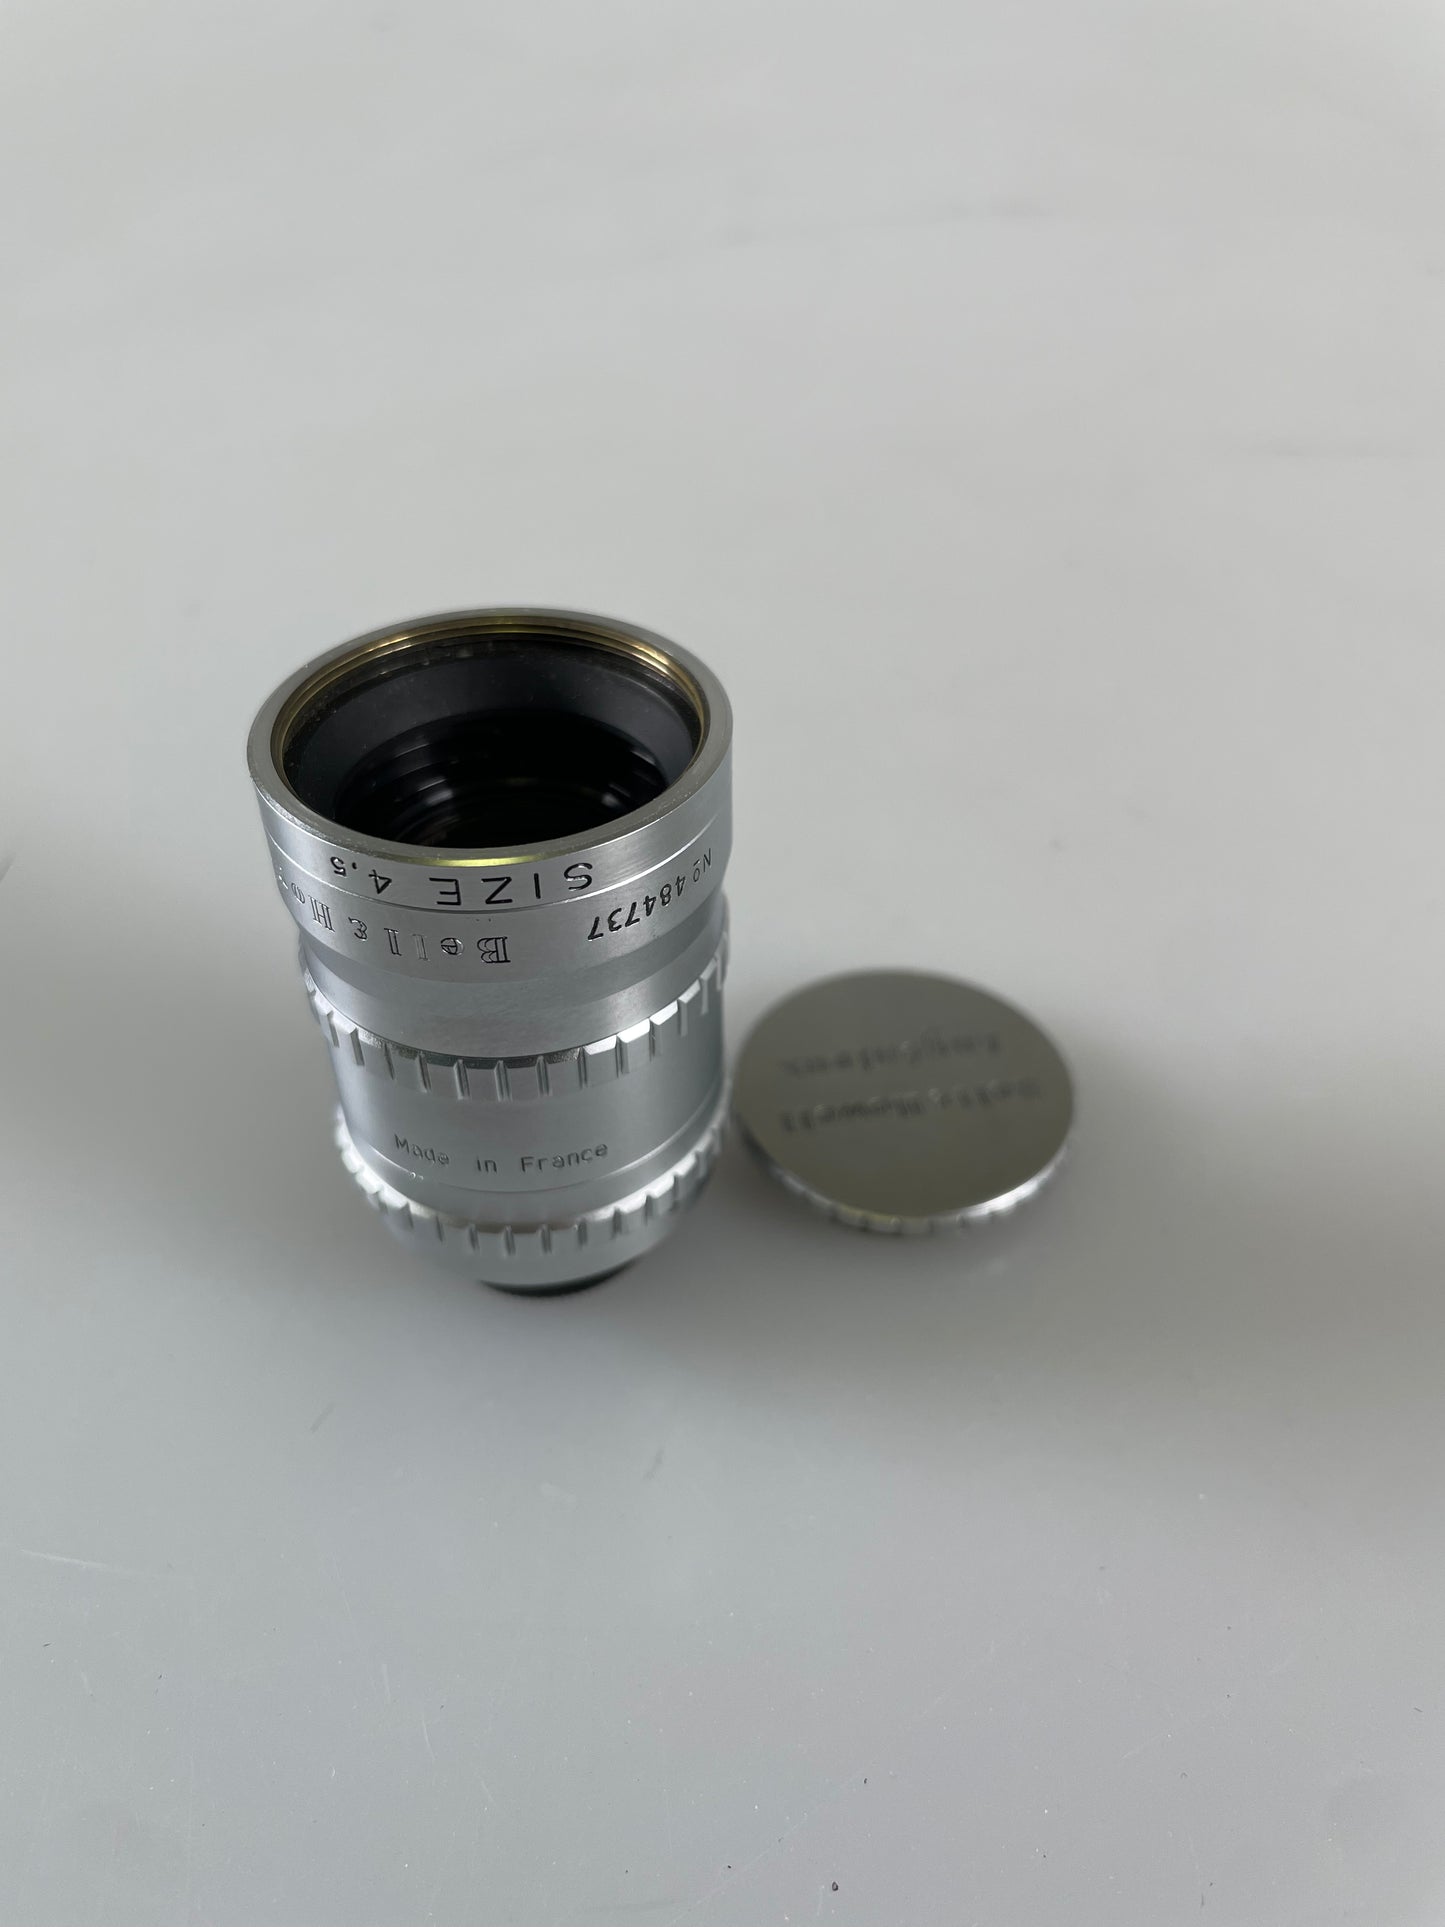 Bell & Howell Angenieux 6.5mm f1.8 Vintage Cine Movie Camera Lens D mount